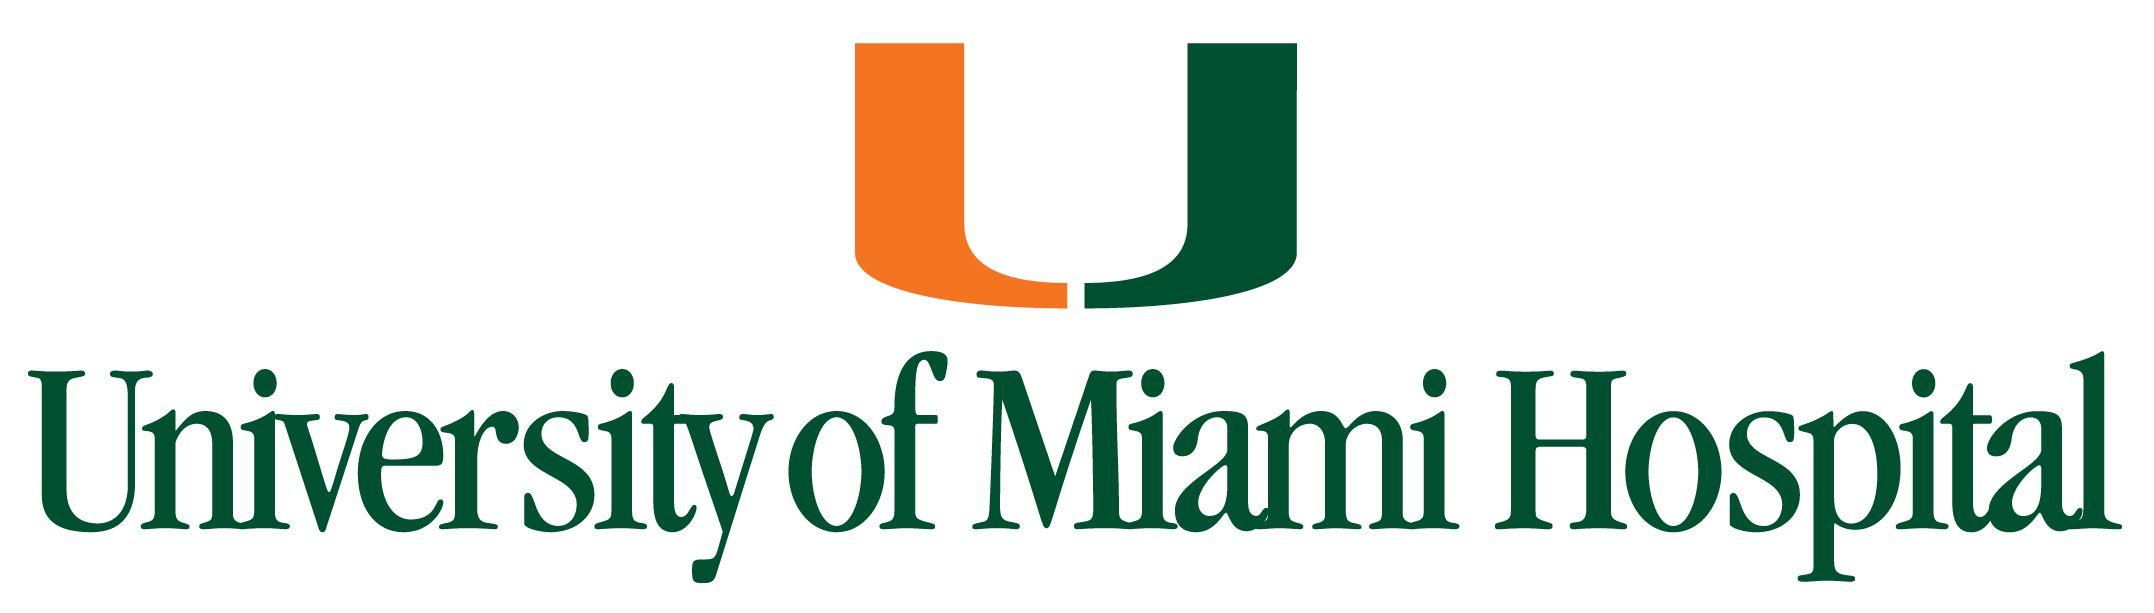 U of U Hospital Logo - University of miami Logos